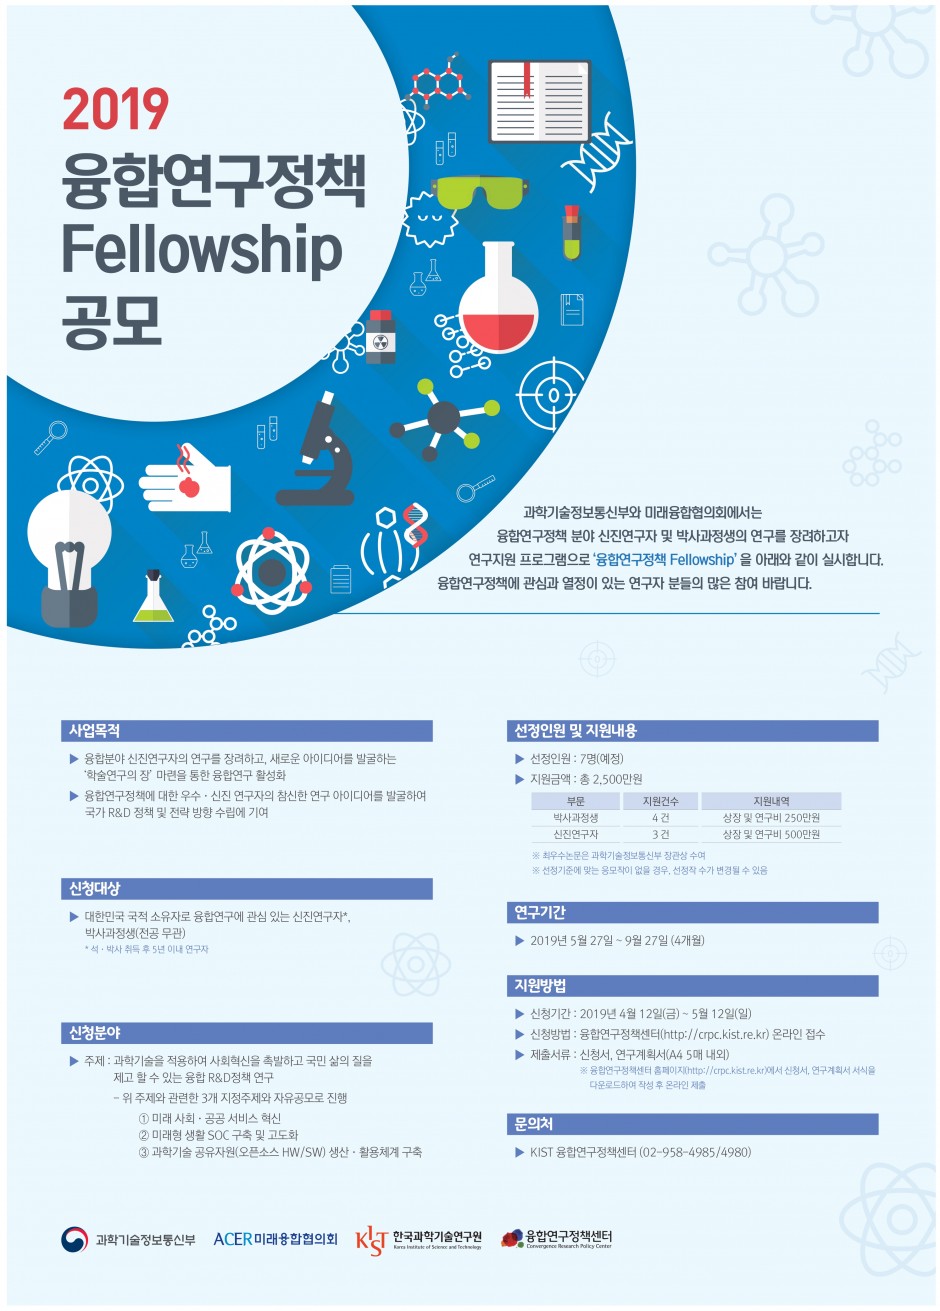 2019 Fellowship 공고 포스터_full